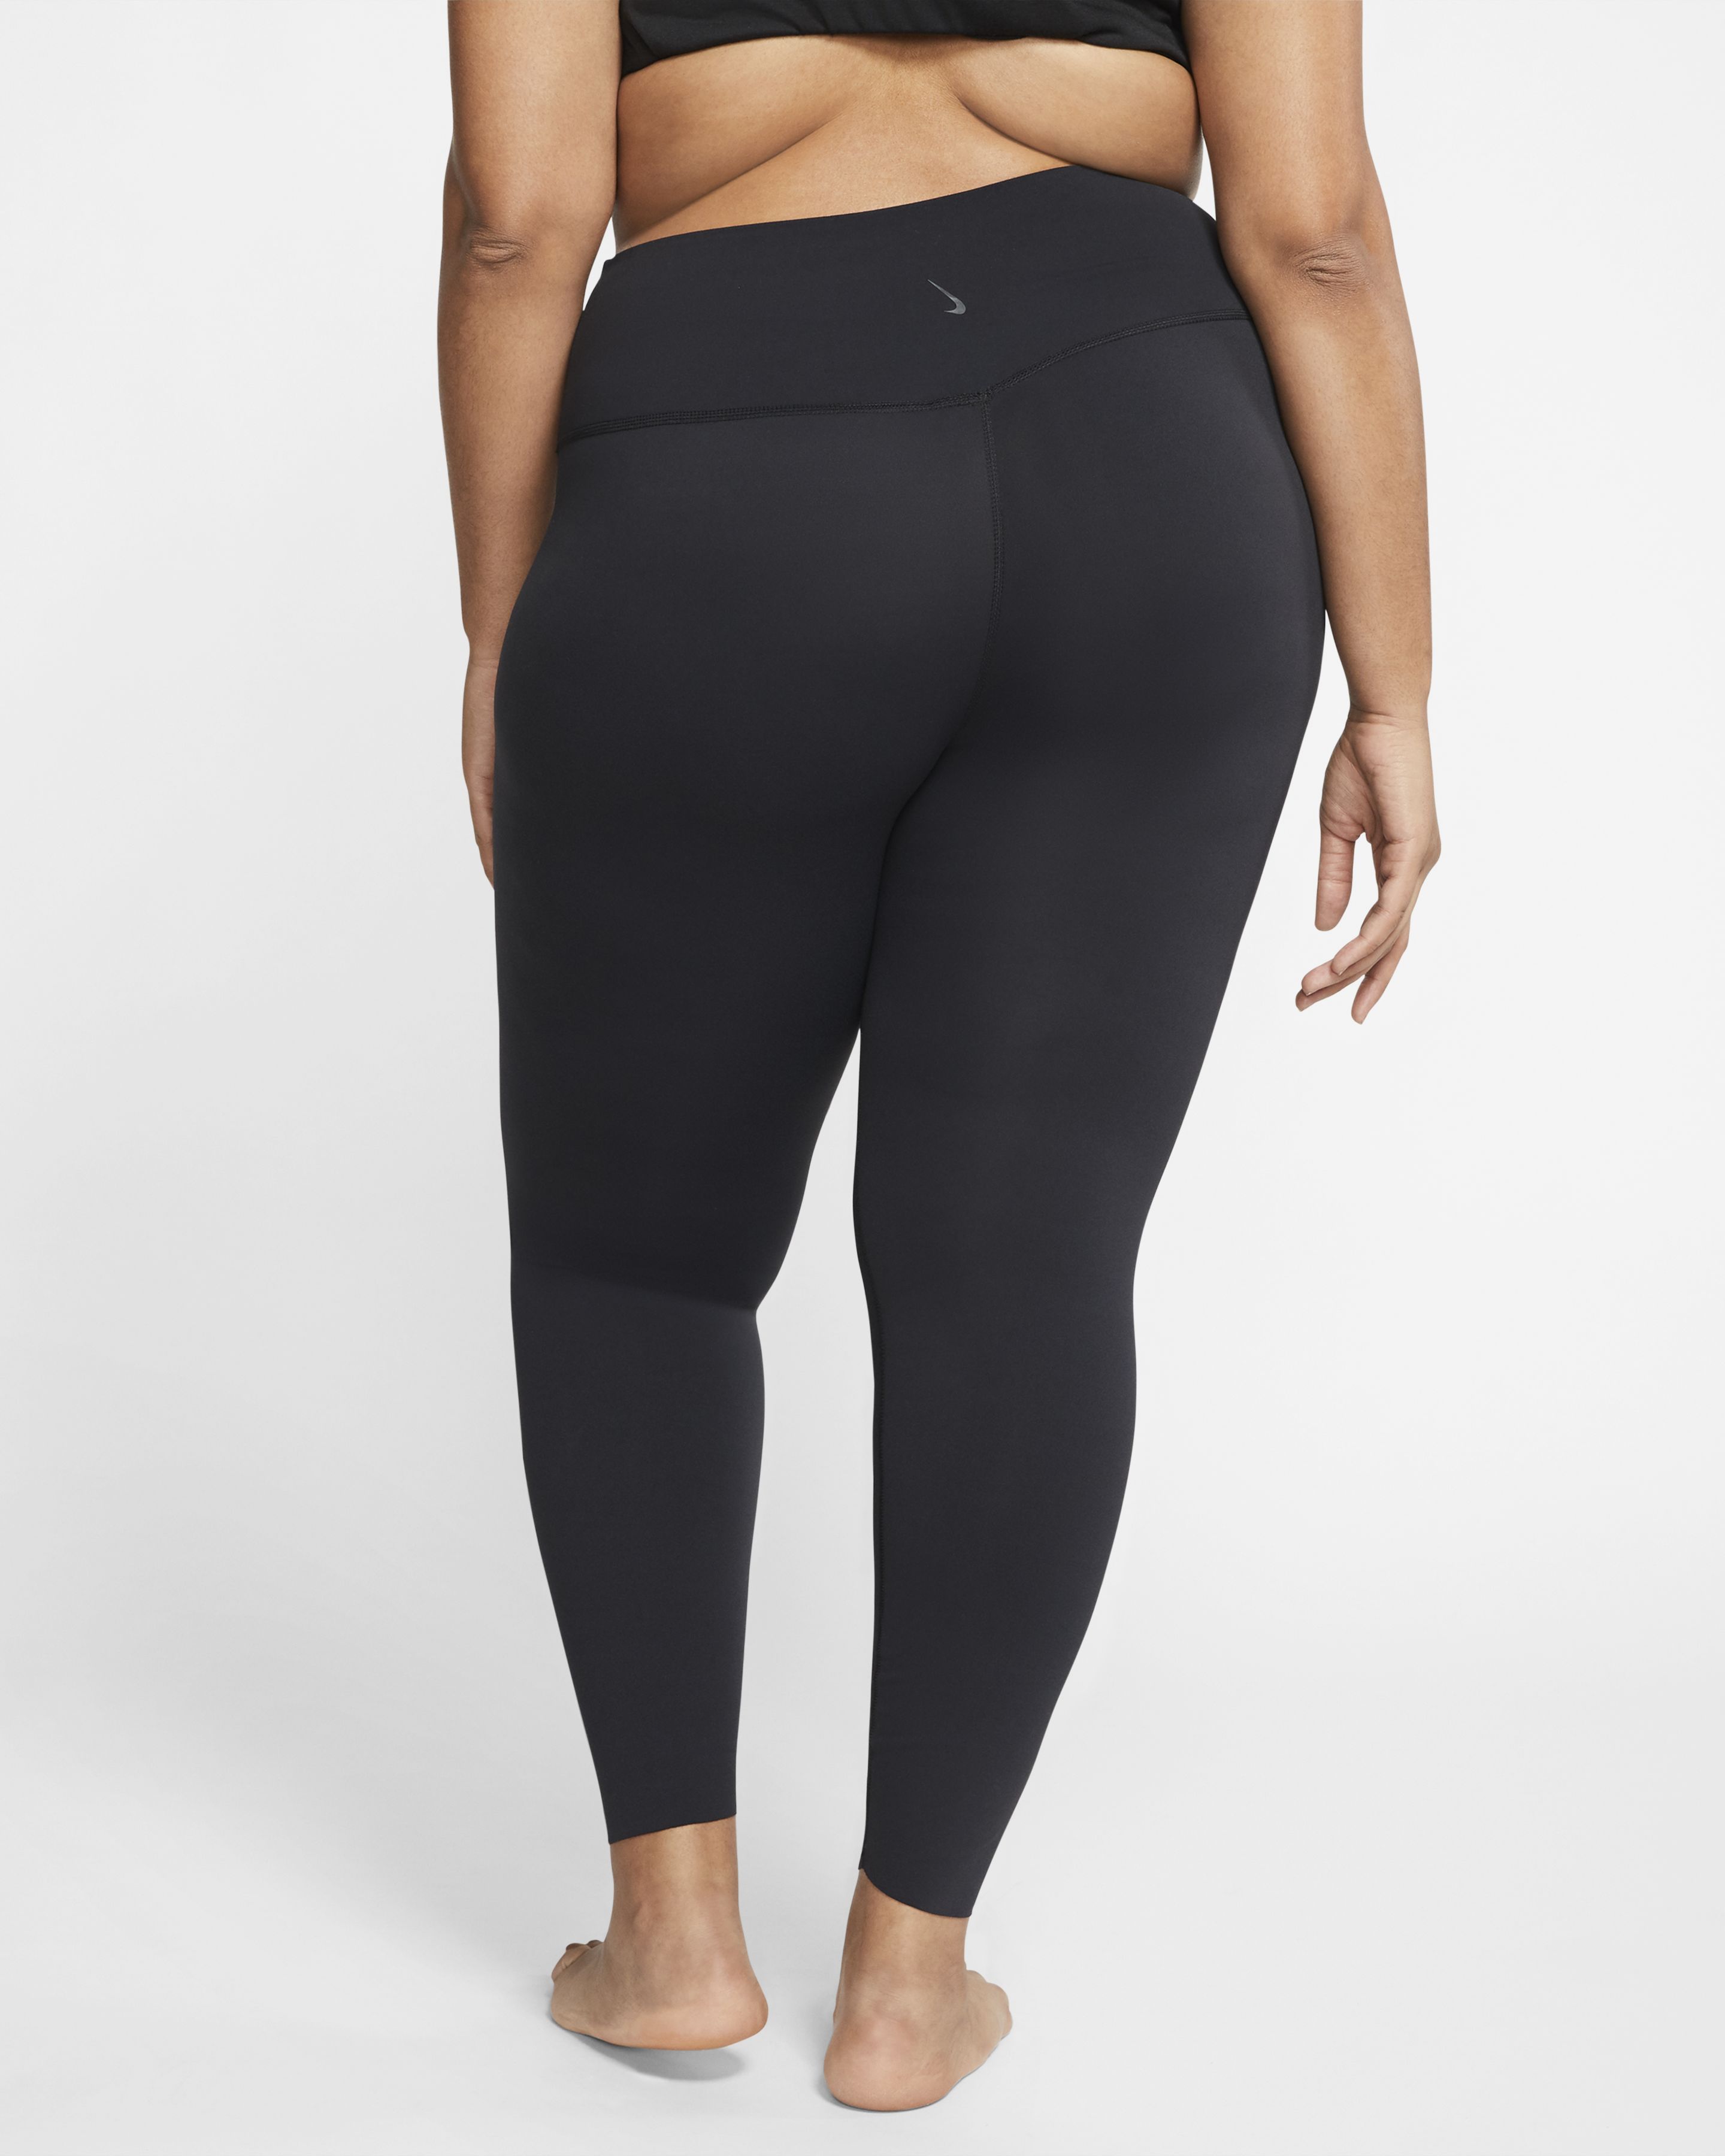 Hanna Nikole Women's Active High Waist Yoga Pants with Pocket Tummy Control  Running Pants 16W Black at Amazon Women's Clothing store